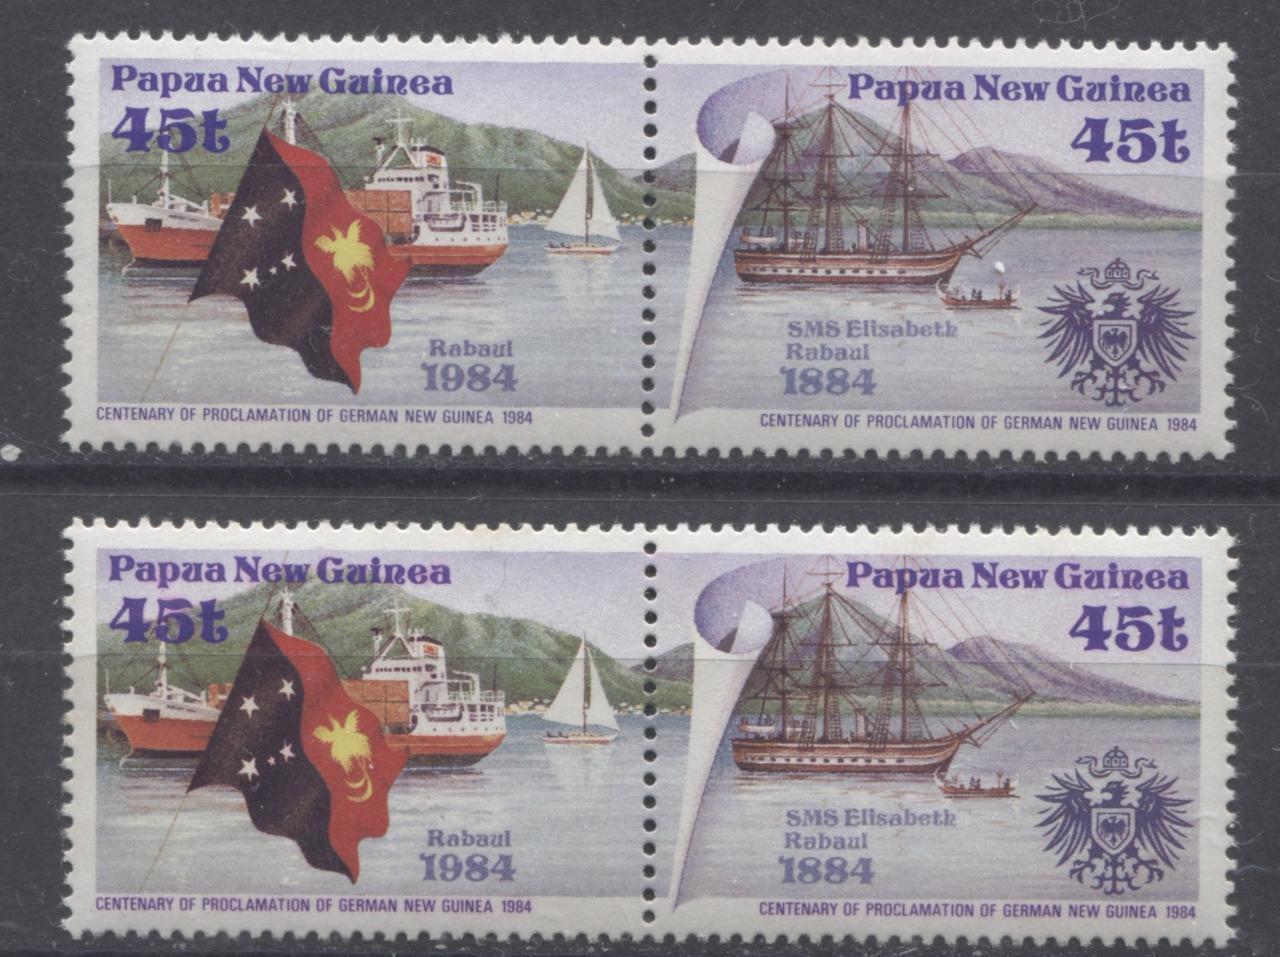 Papua New Guinea #609 1984 Centenary of Proclamation Reg and Aniline Ink VFNH Brixton Chrome 